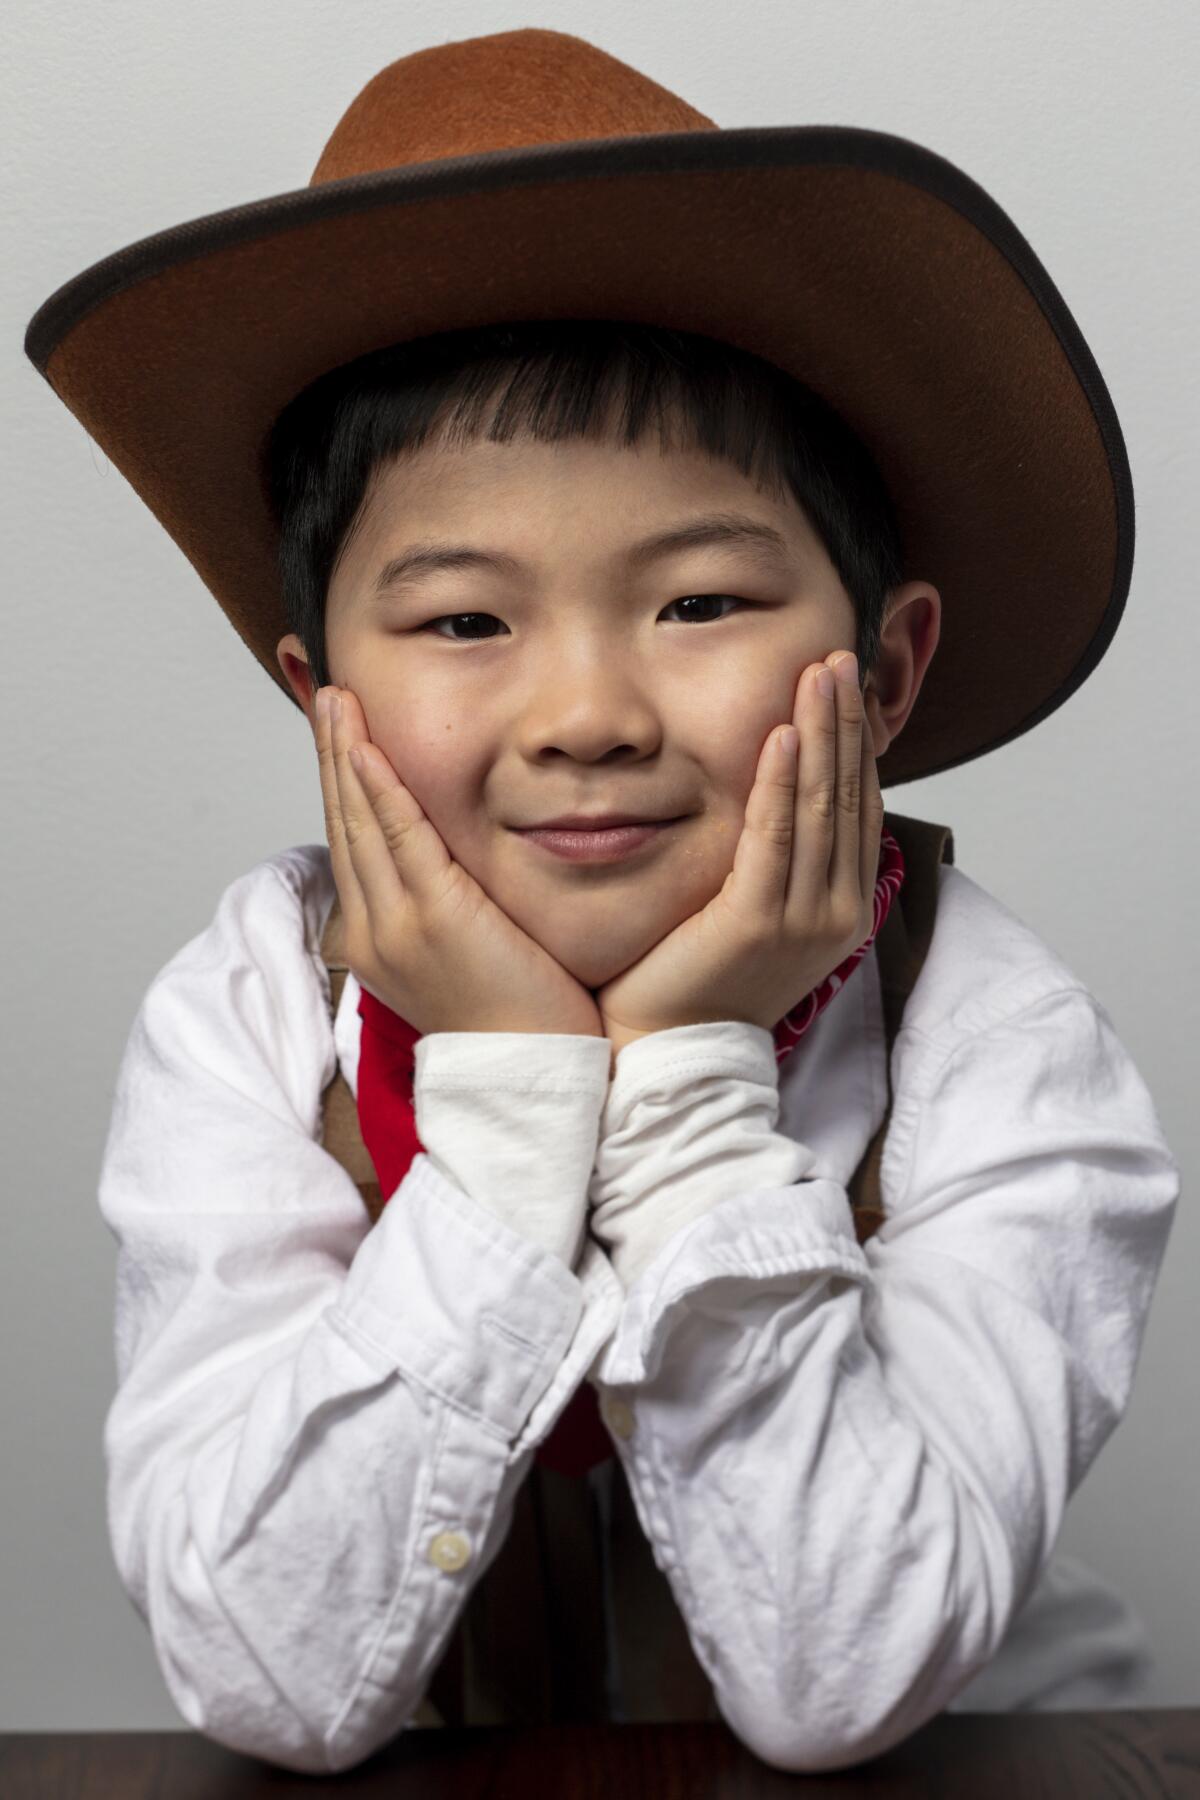 Child in a cowboy hat